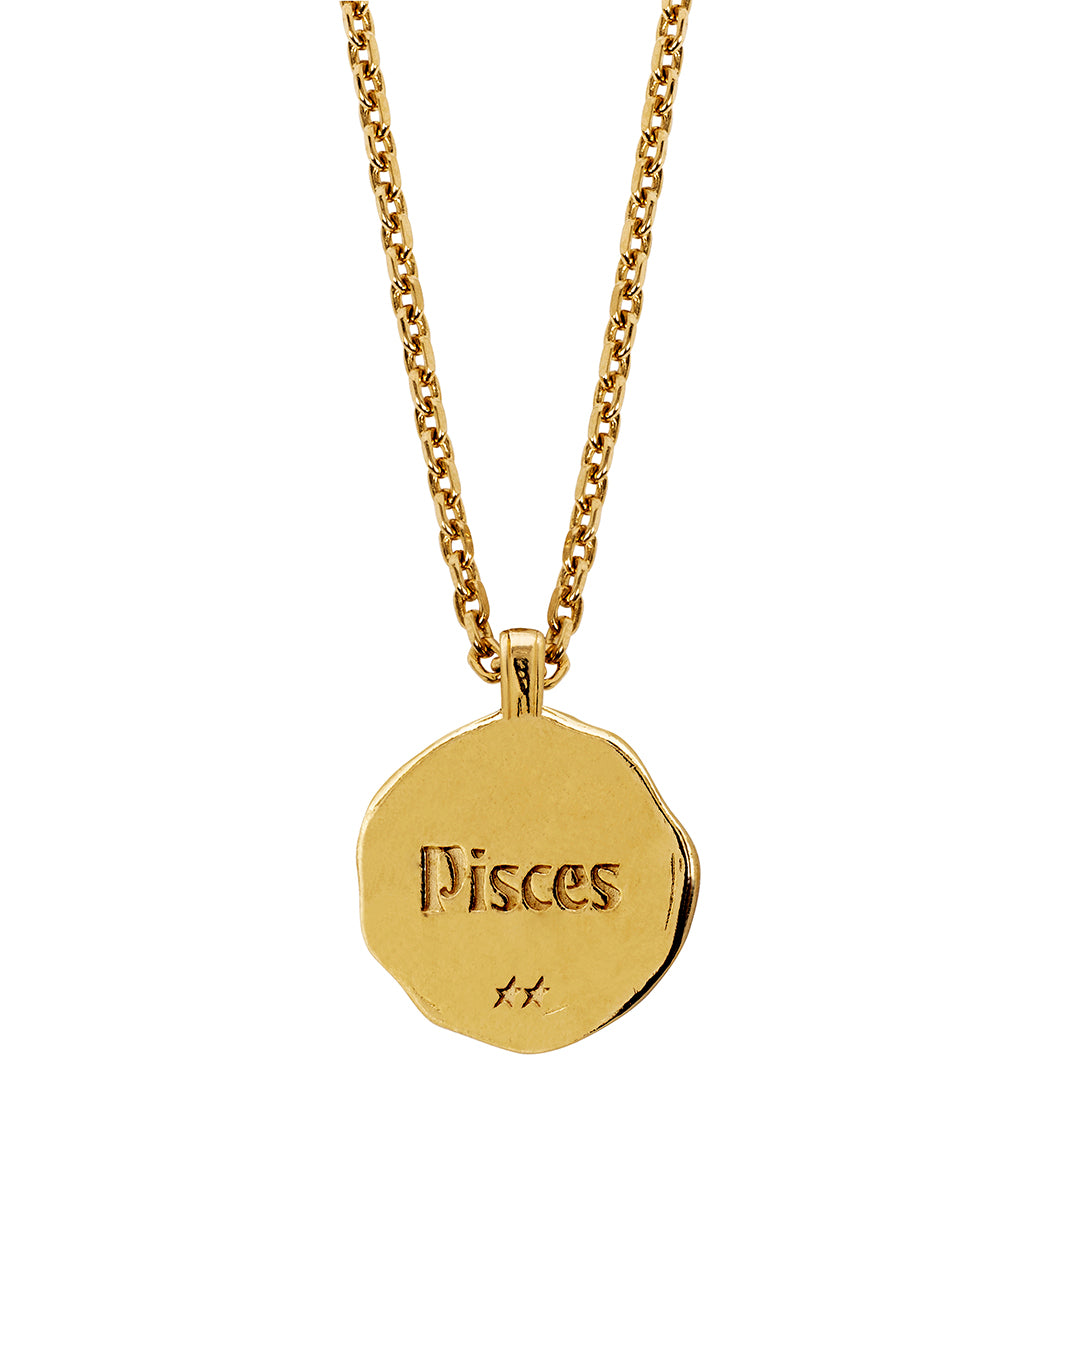 Pisces Necklace Gold